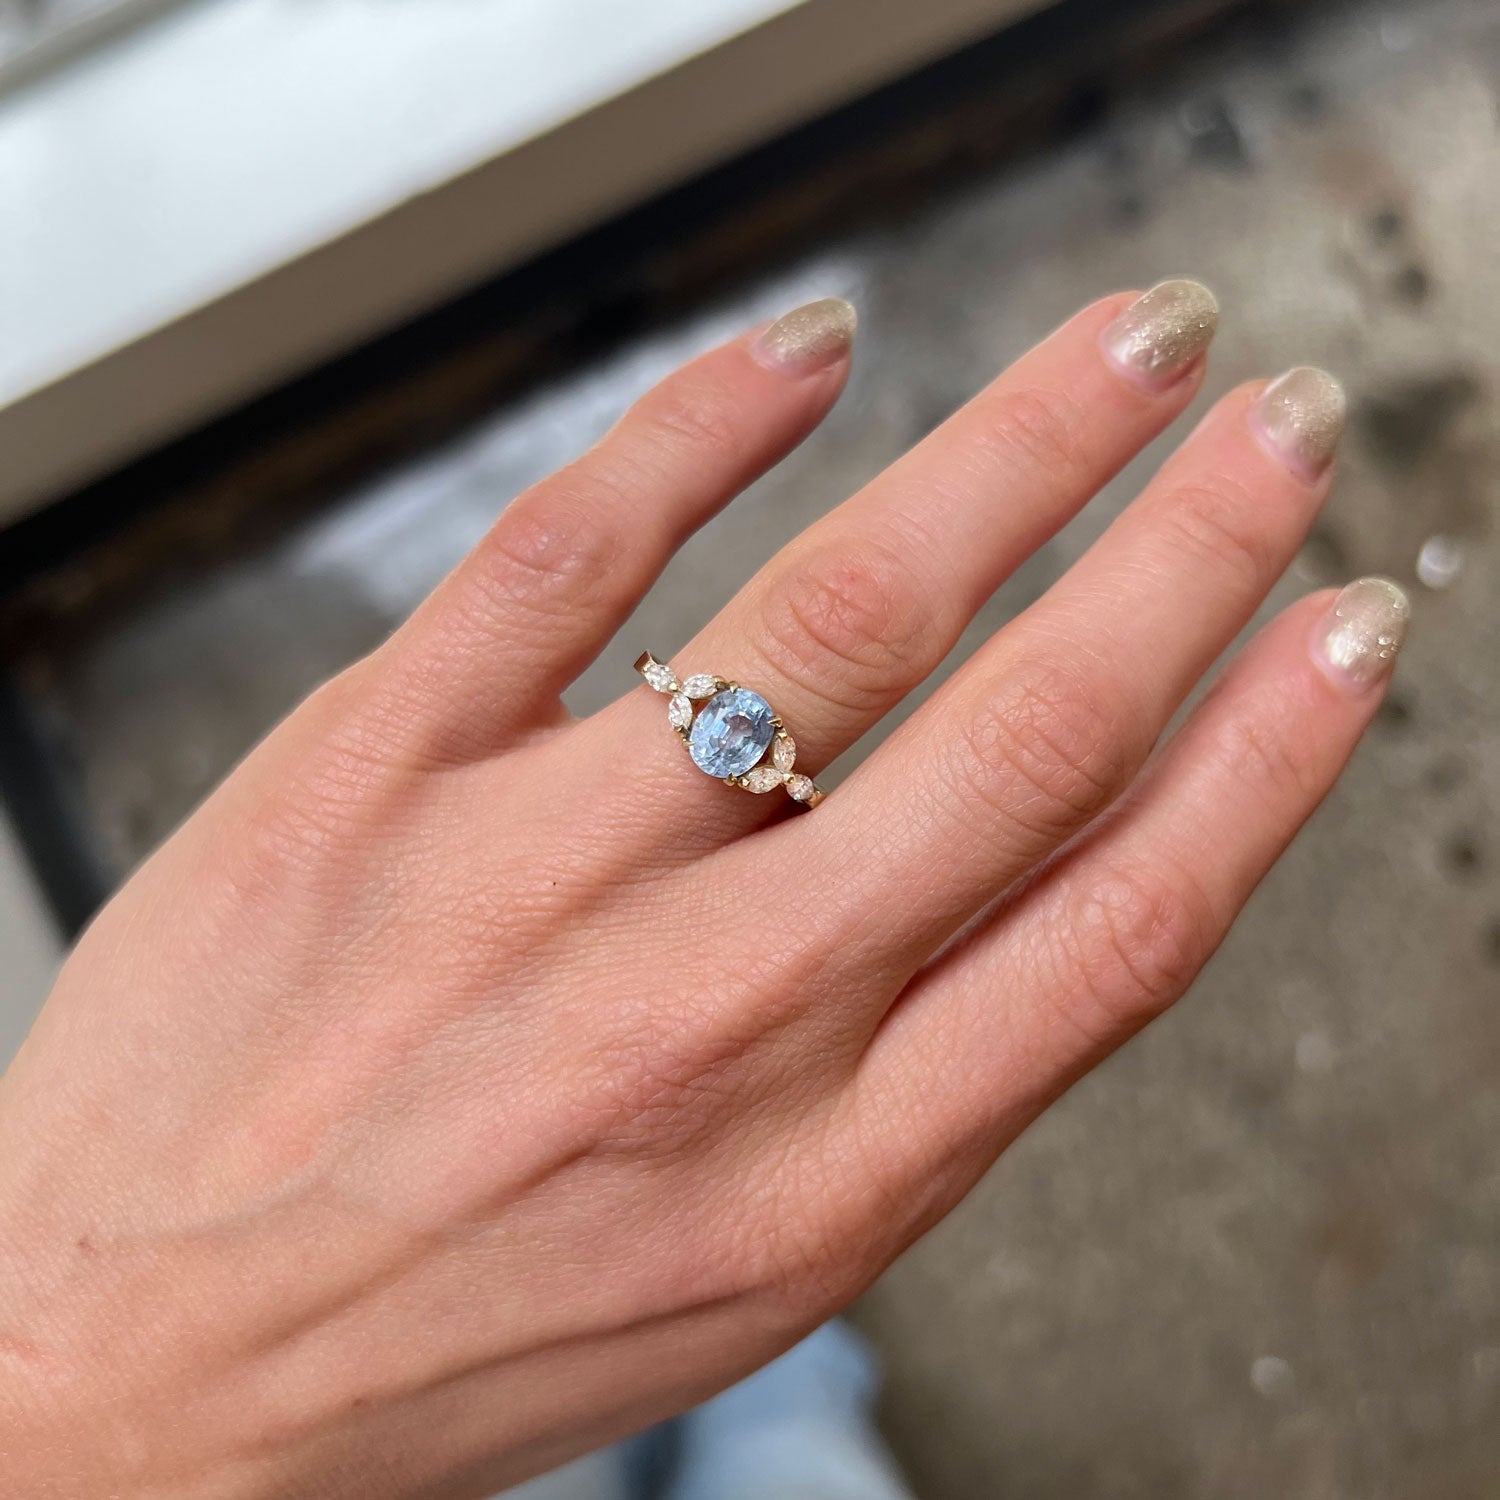 Cornflower Blue Sapphire & Marquise Diamond Ring